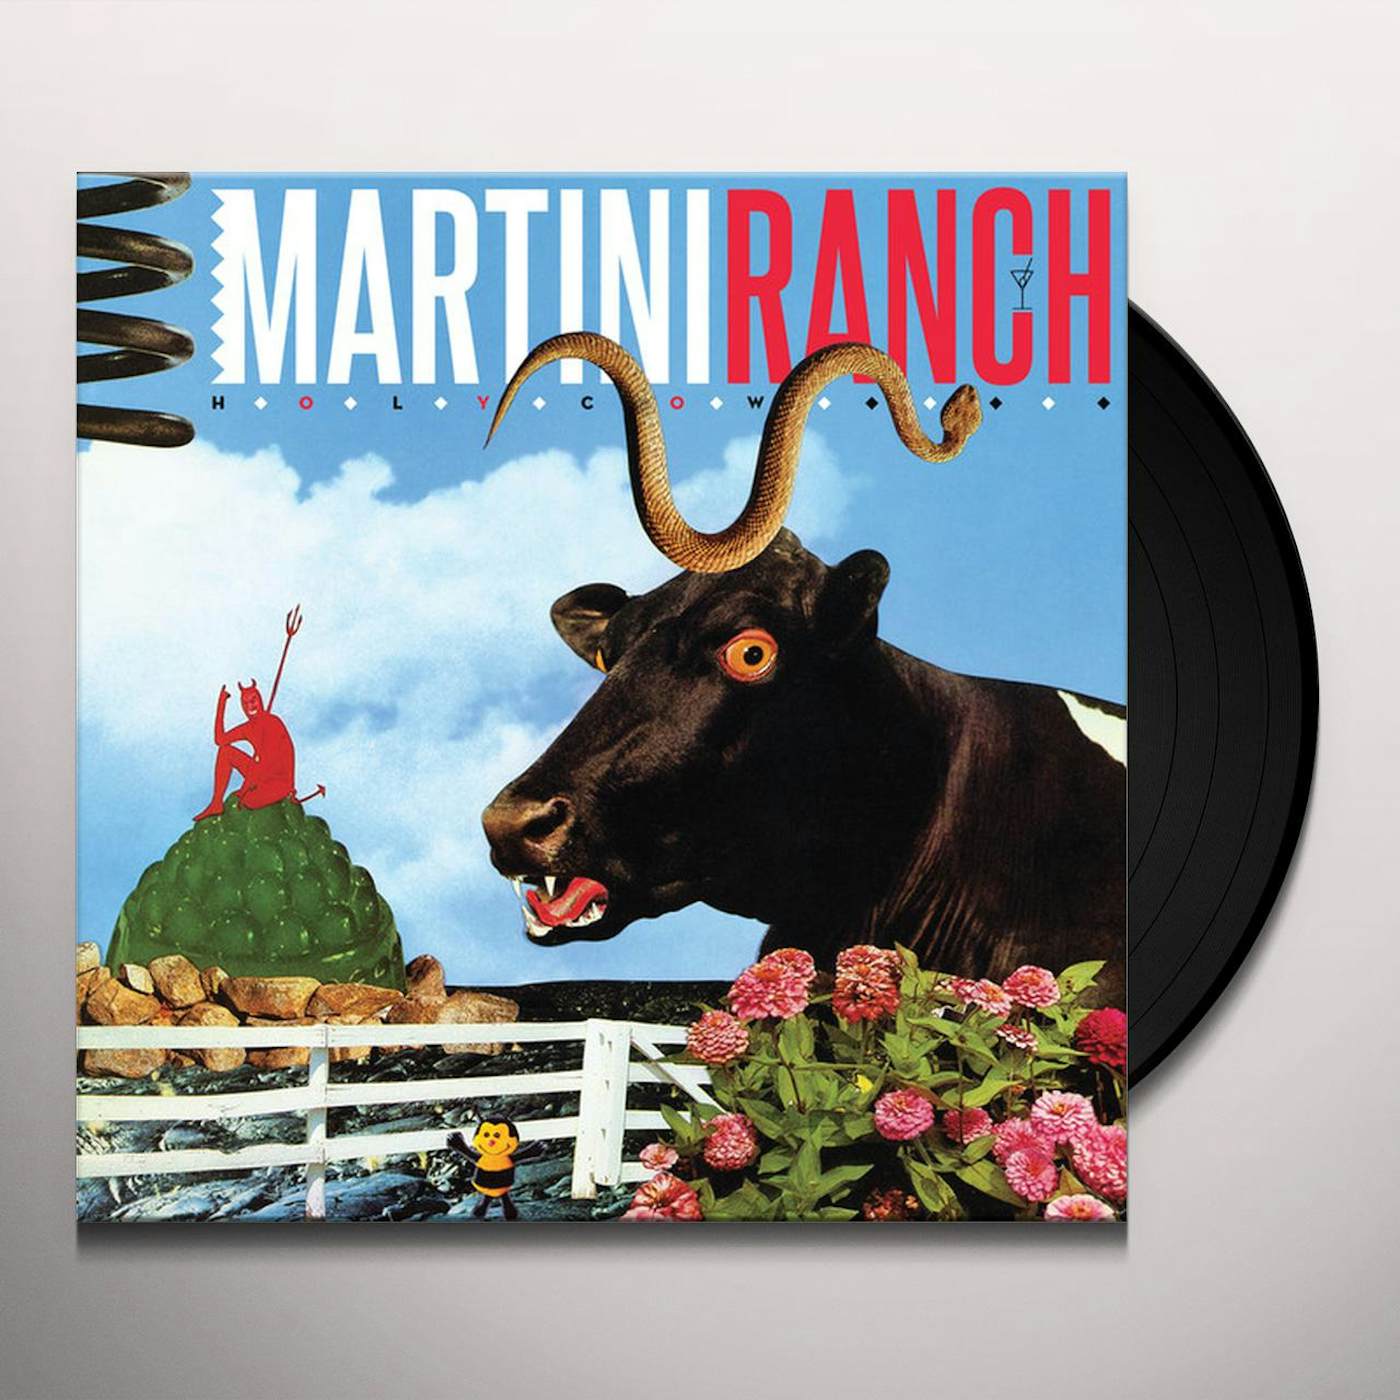 Martini Ranch Holy Cow Vinyl Record